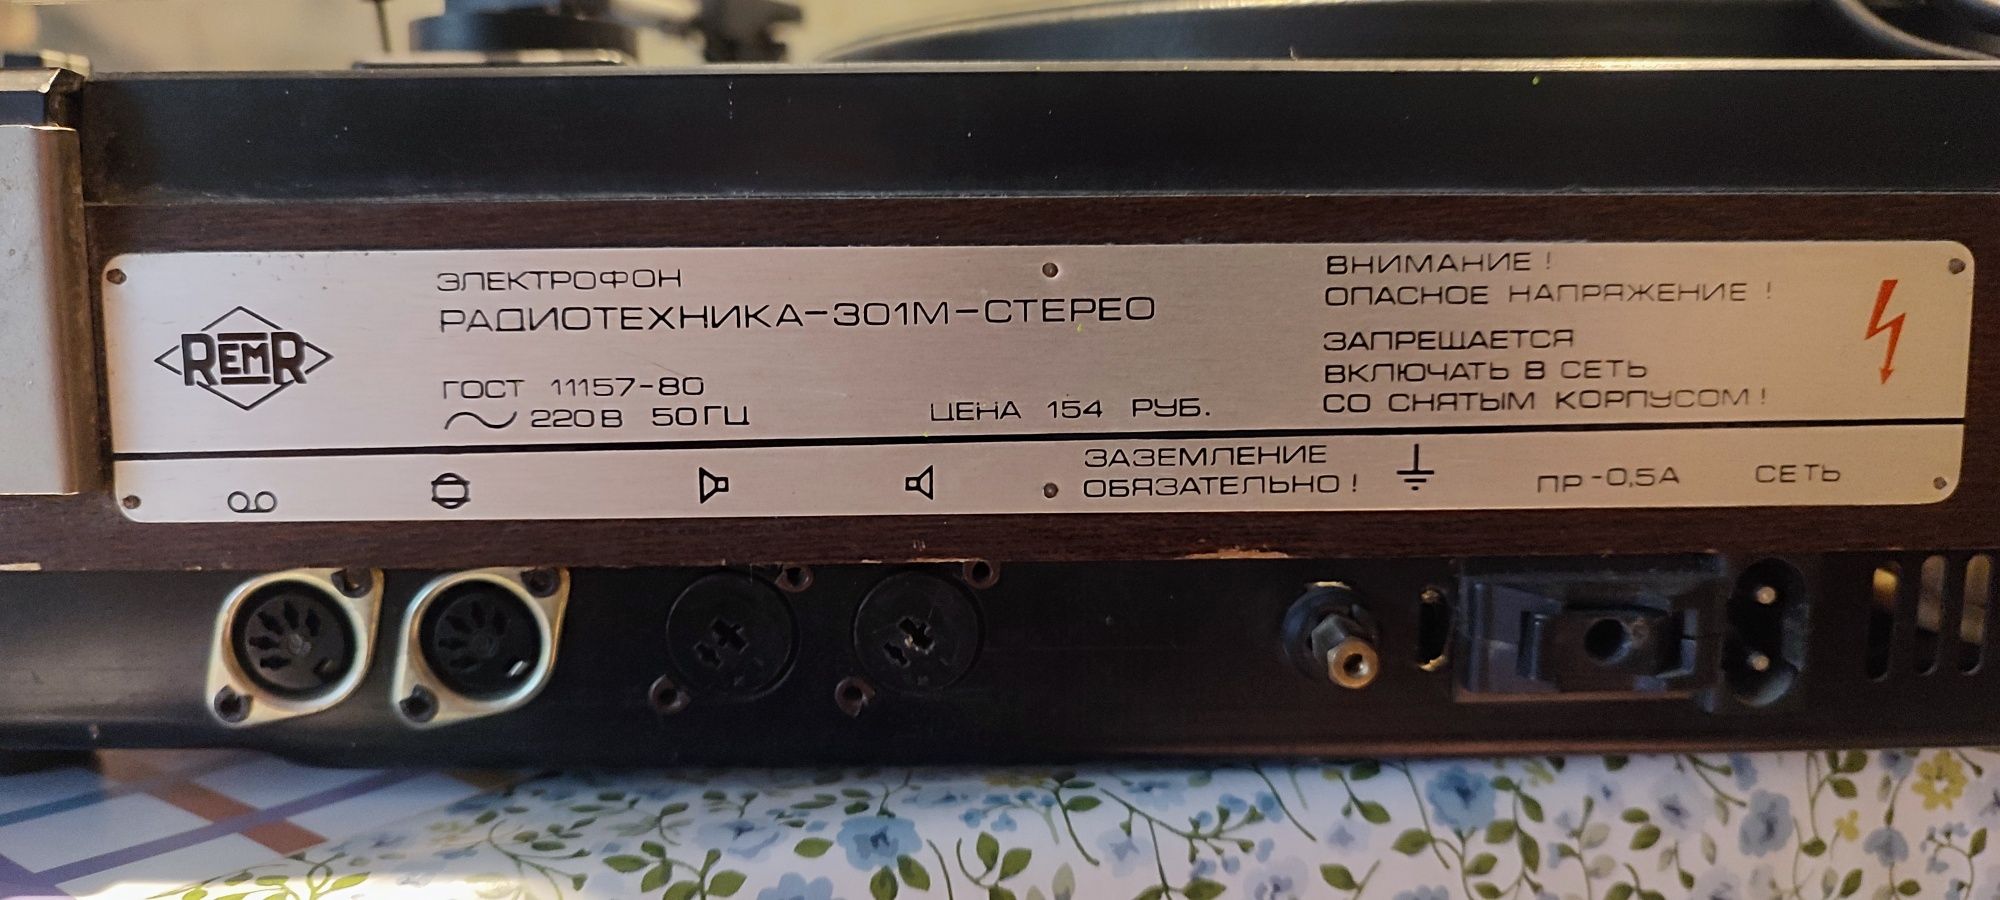 Gramofon Adapter Radiotechnika 301M Stereo